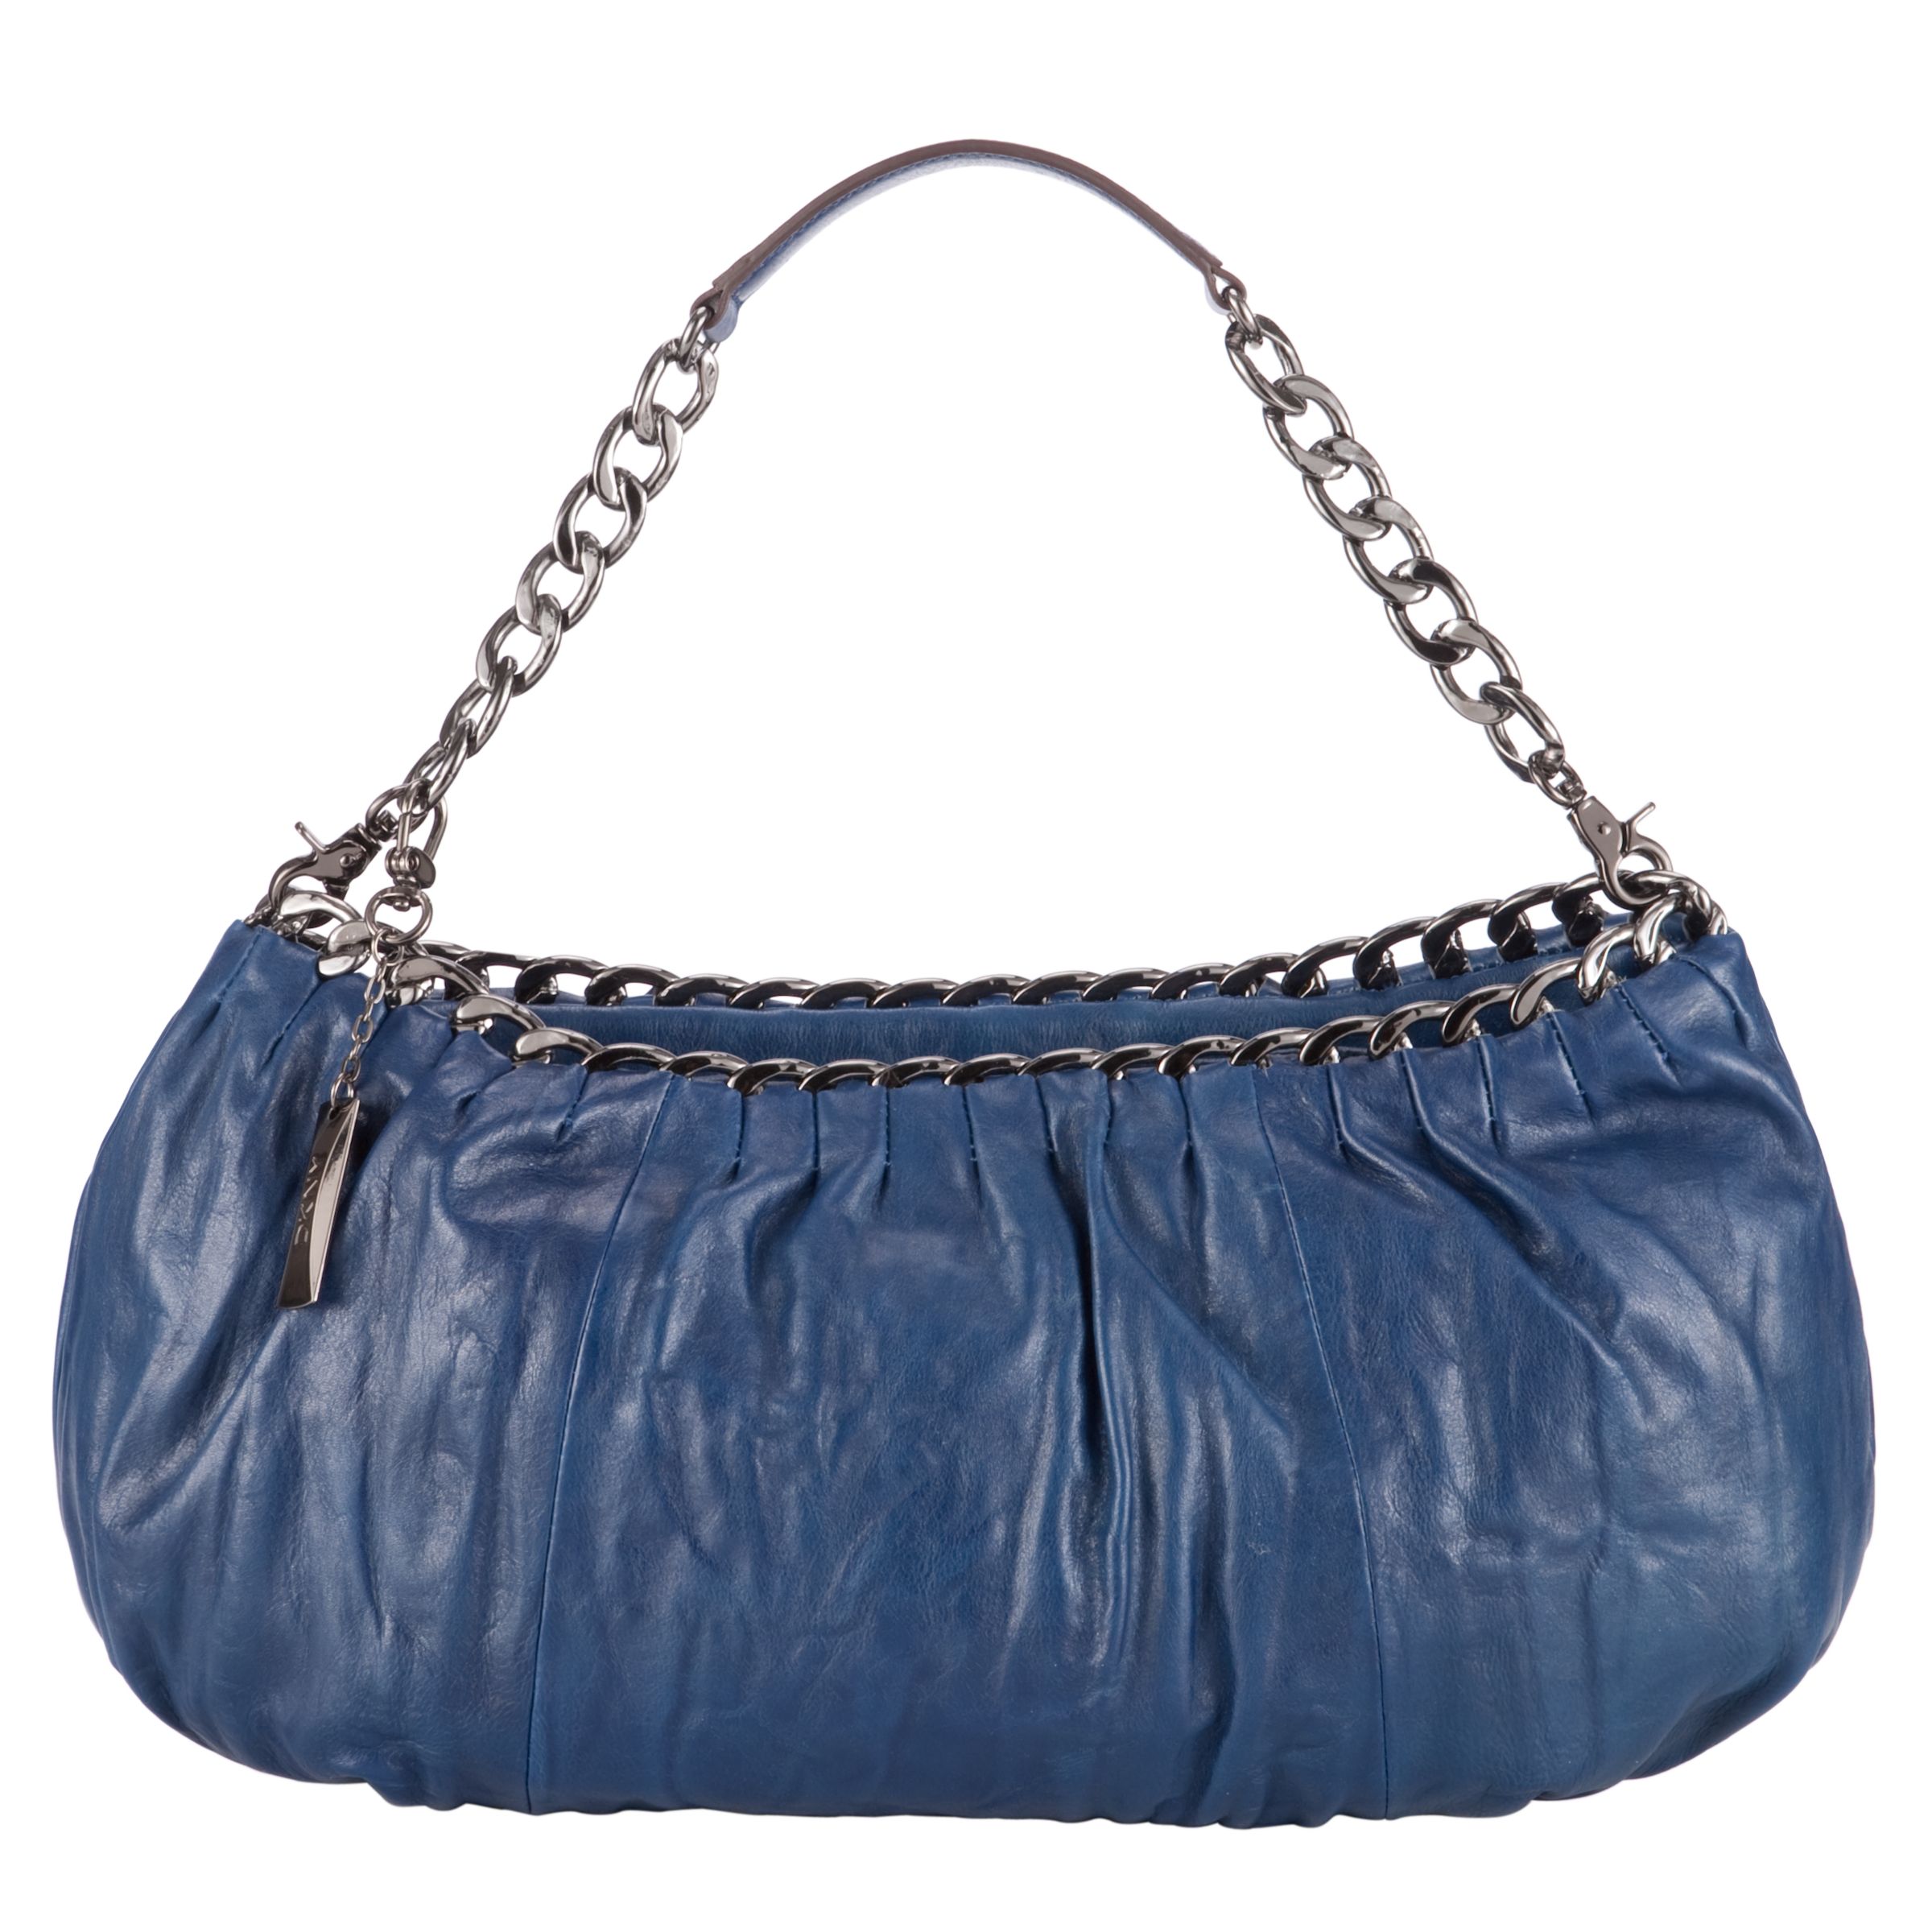 DKNY Burnished Leather Chain Handle East West Hobo Handbag, Blue at JohnLewis